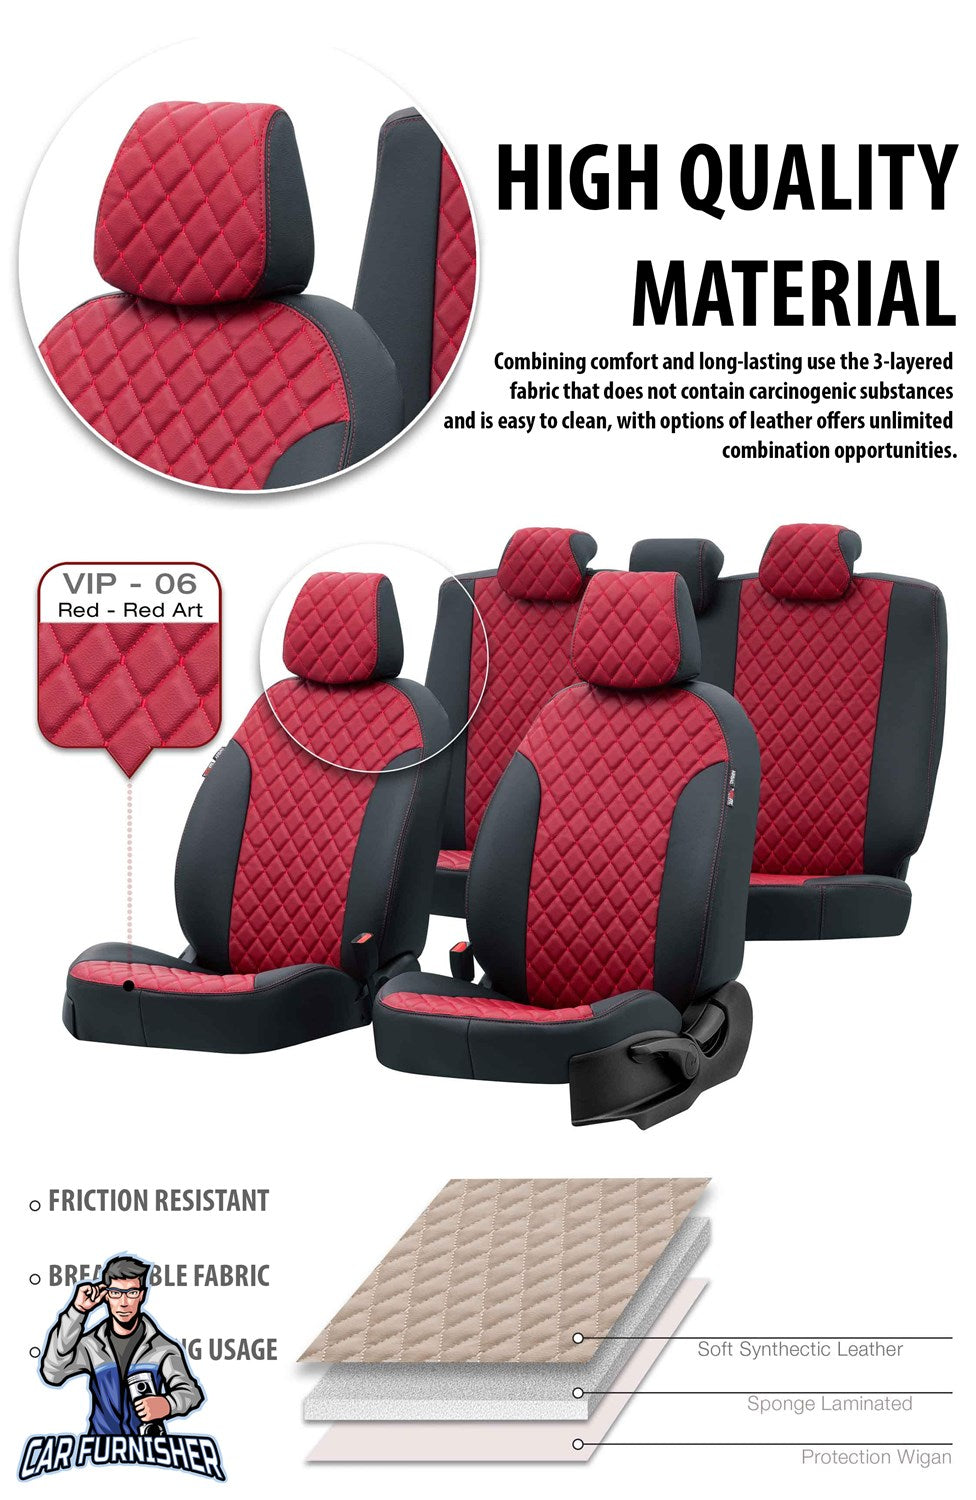 Alfa Romeo Giulietta Seat Cover Madrid Leather Design Smoked Leather